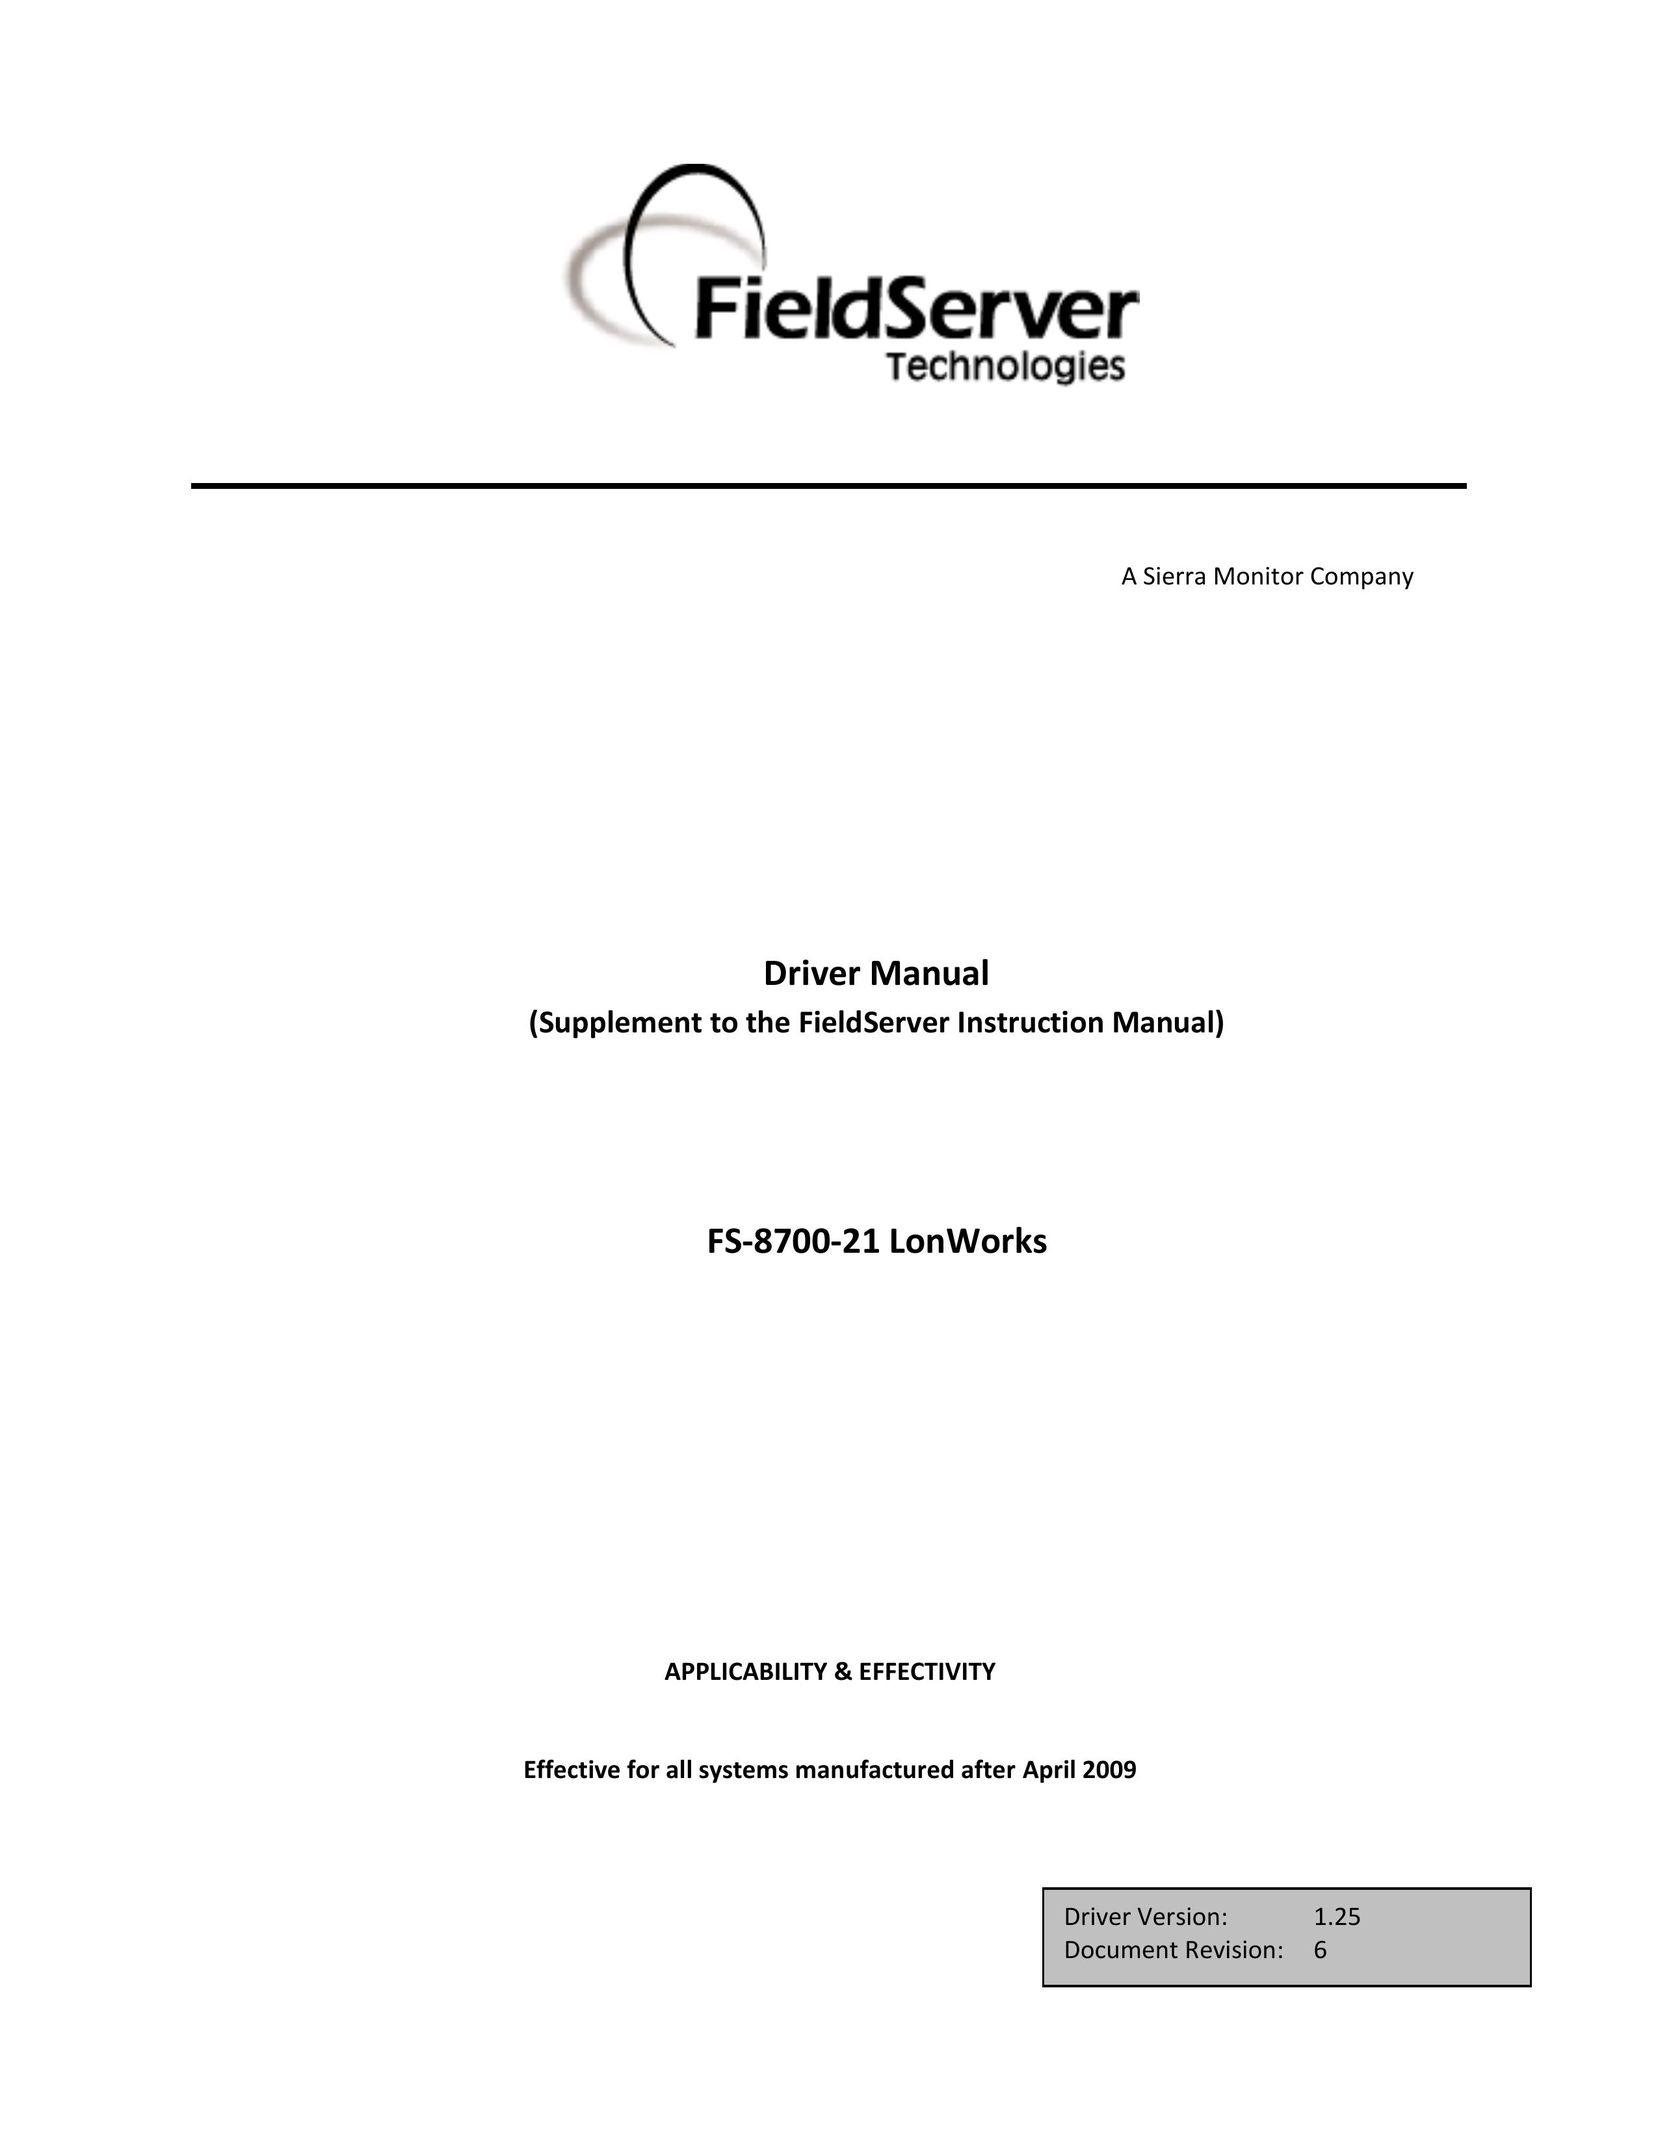 FieldServer FS-8700-21 Computer Drive User Manual